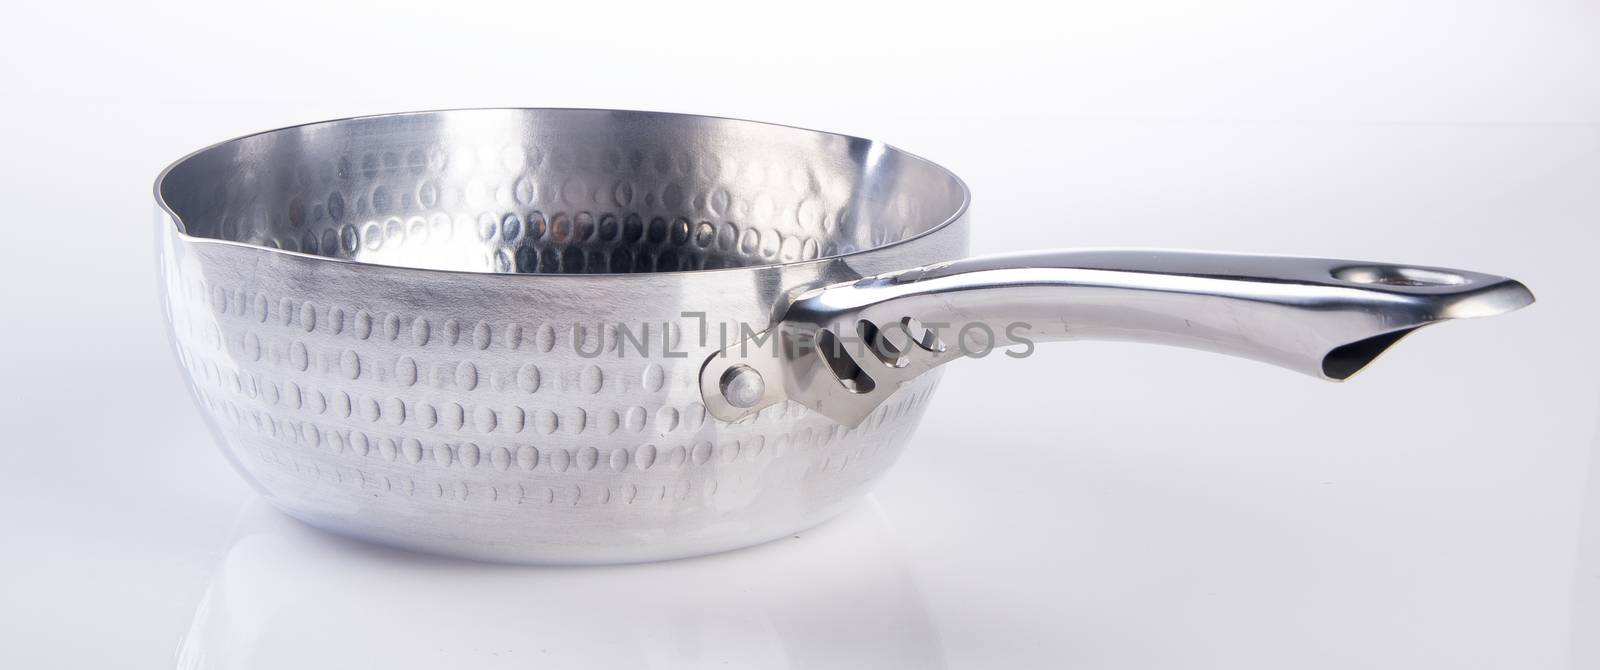 pans. aluminium pans on background. by heinteh